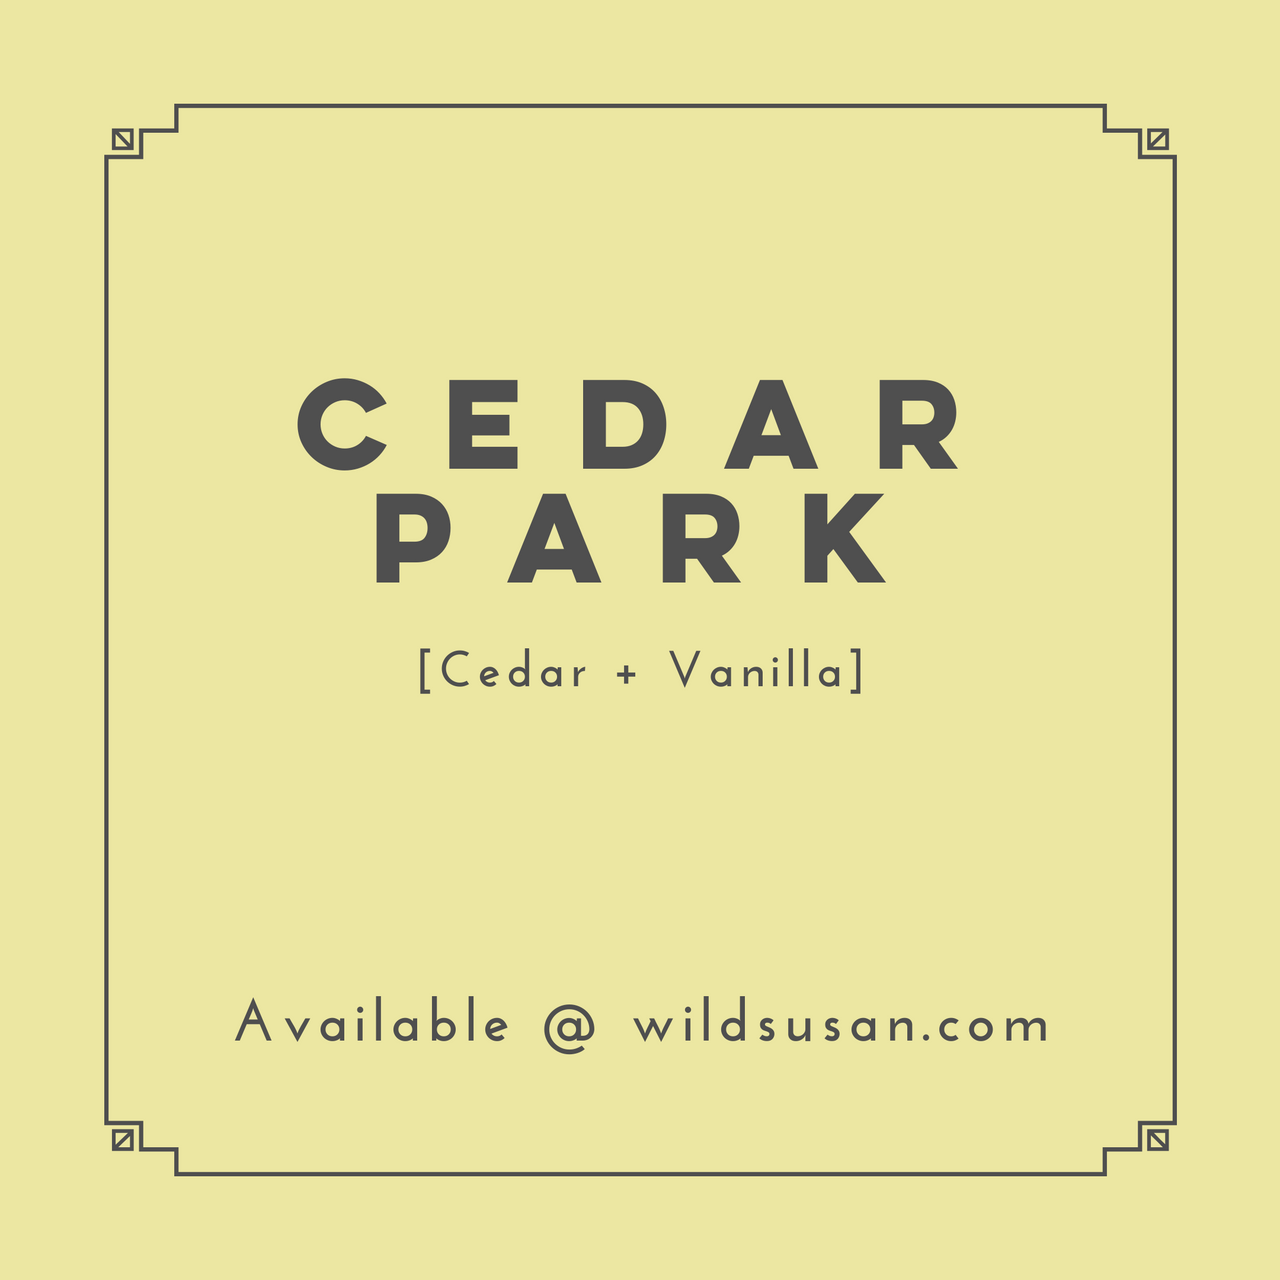 Cedar Park [Cedar + Vanilla] Soy Candle/Wax Melt - The Wild Susan Co